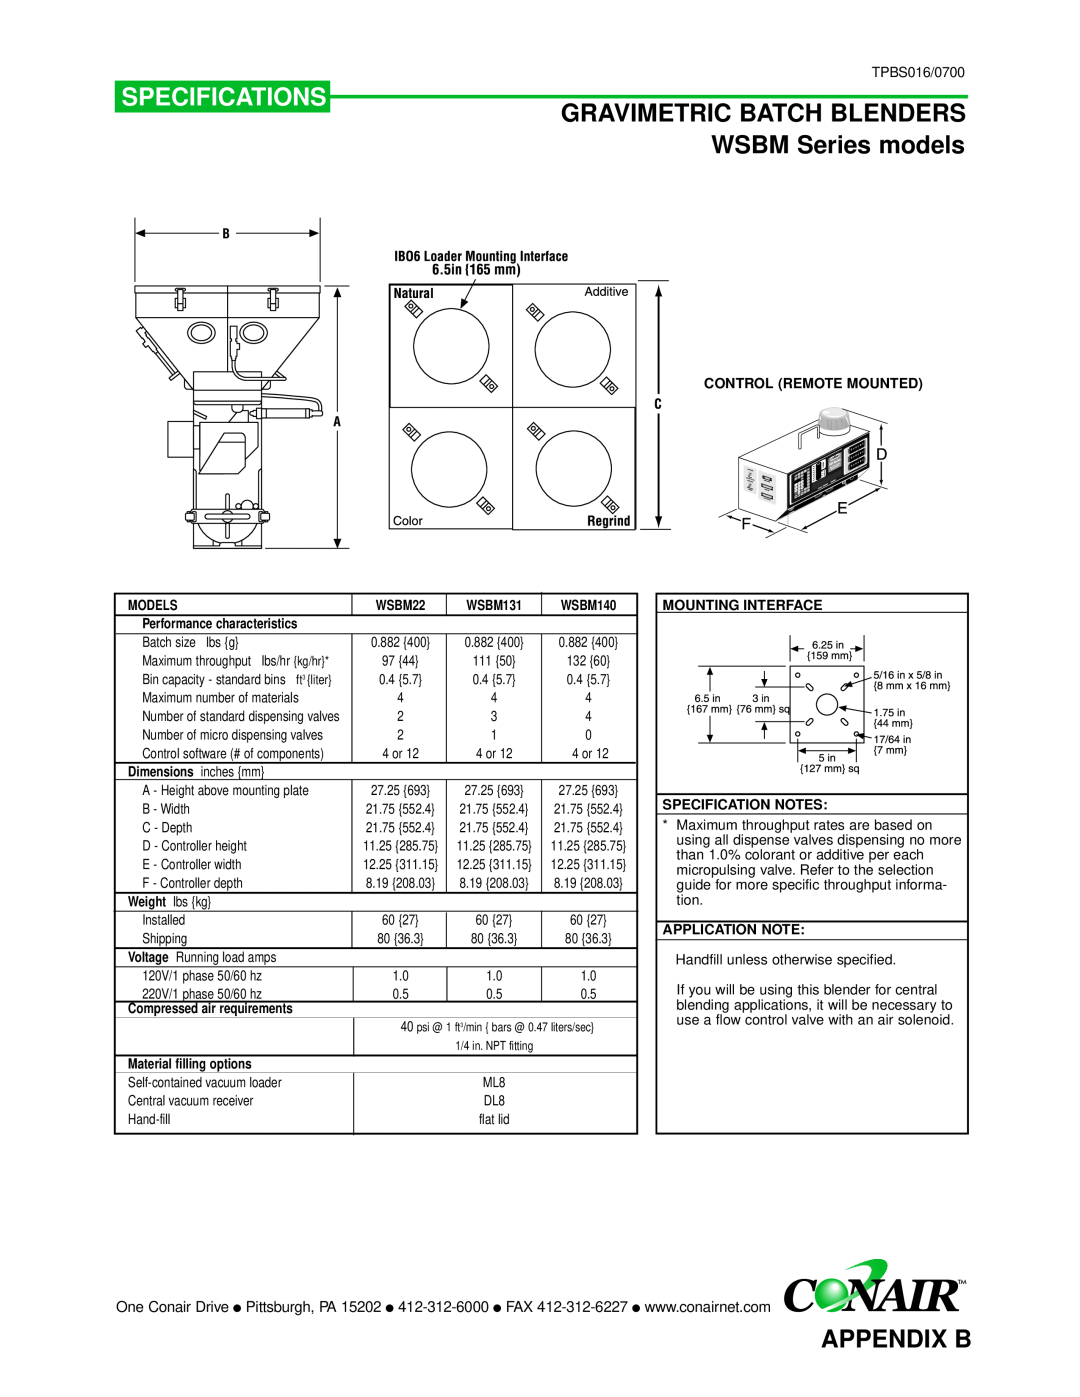 Conair GB manual GRAVIMETRIC BATCH BLENDERS WSBM Series models, Specifications, Appendix B 